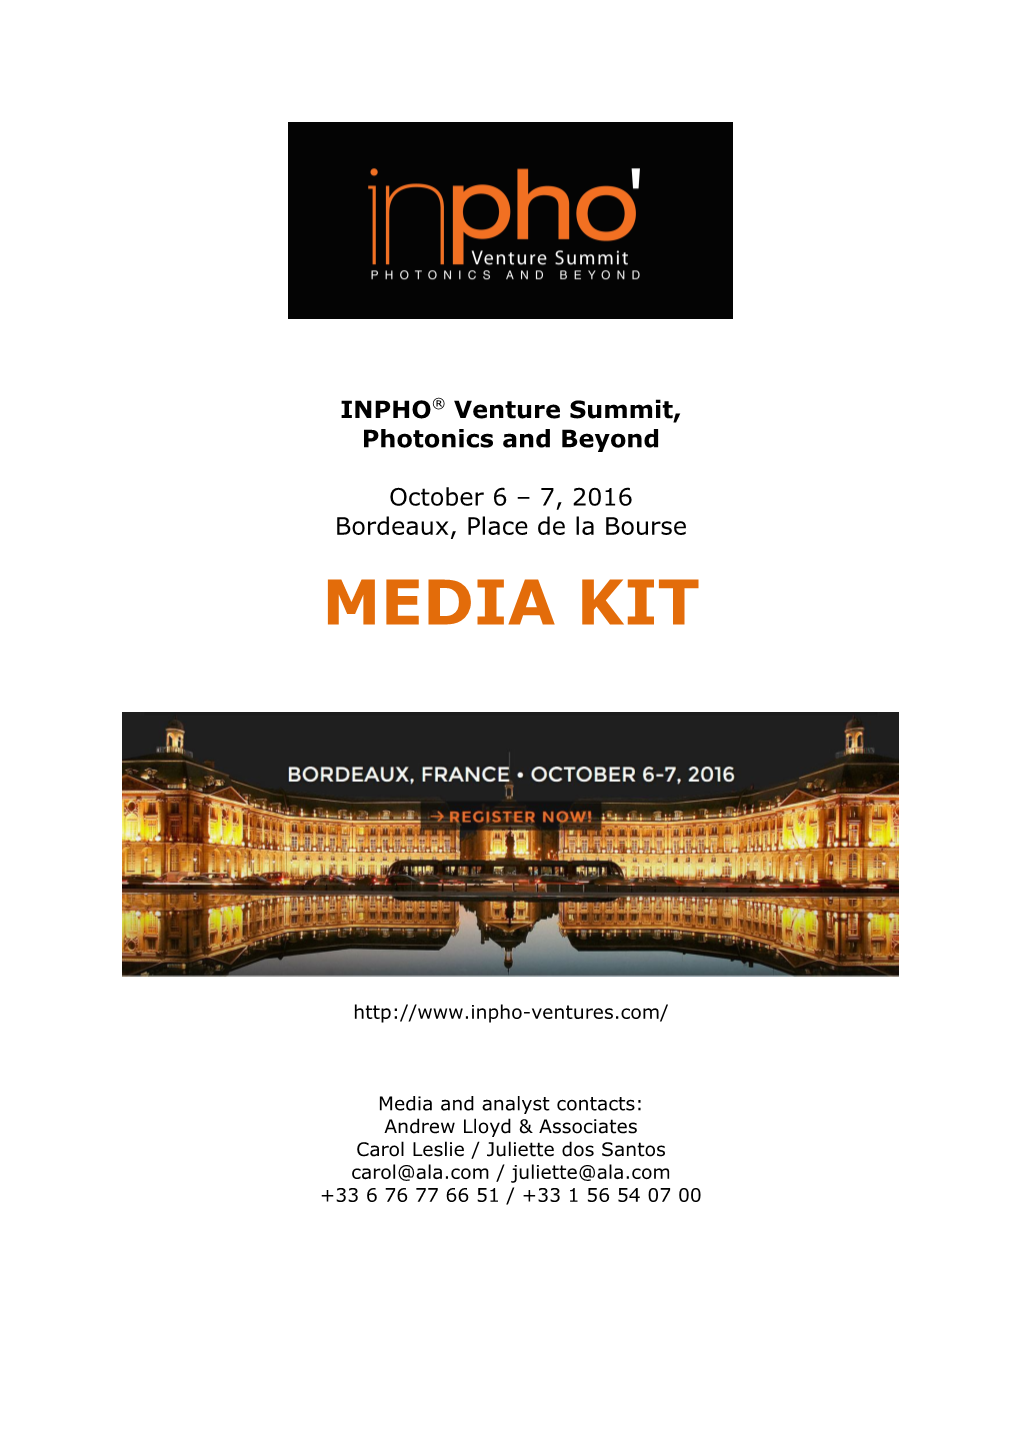 INPHO Venture Summit